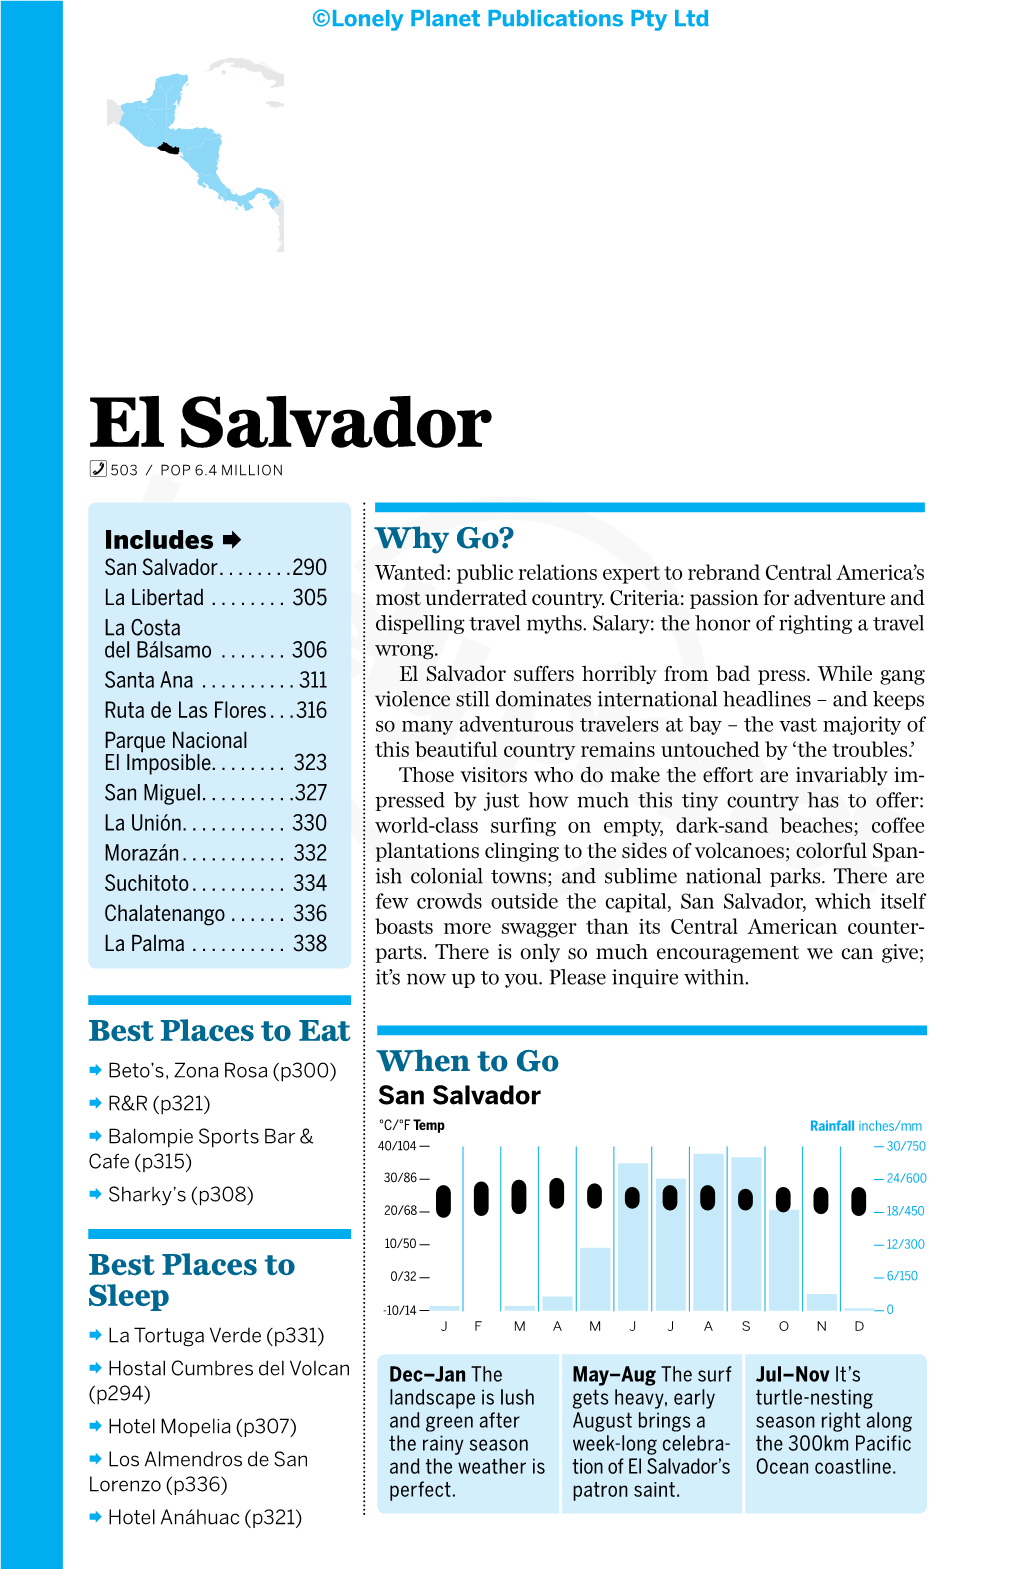 El Salvador Suffers Horribly from Bad Press